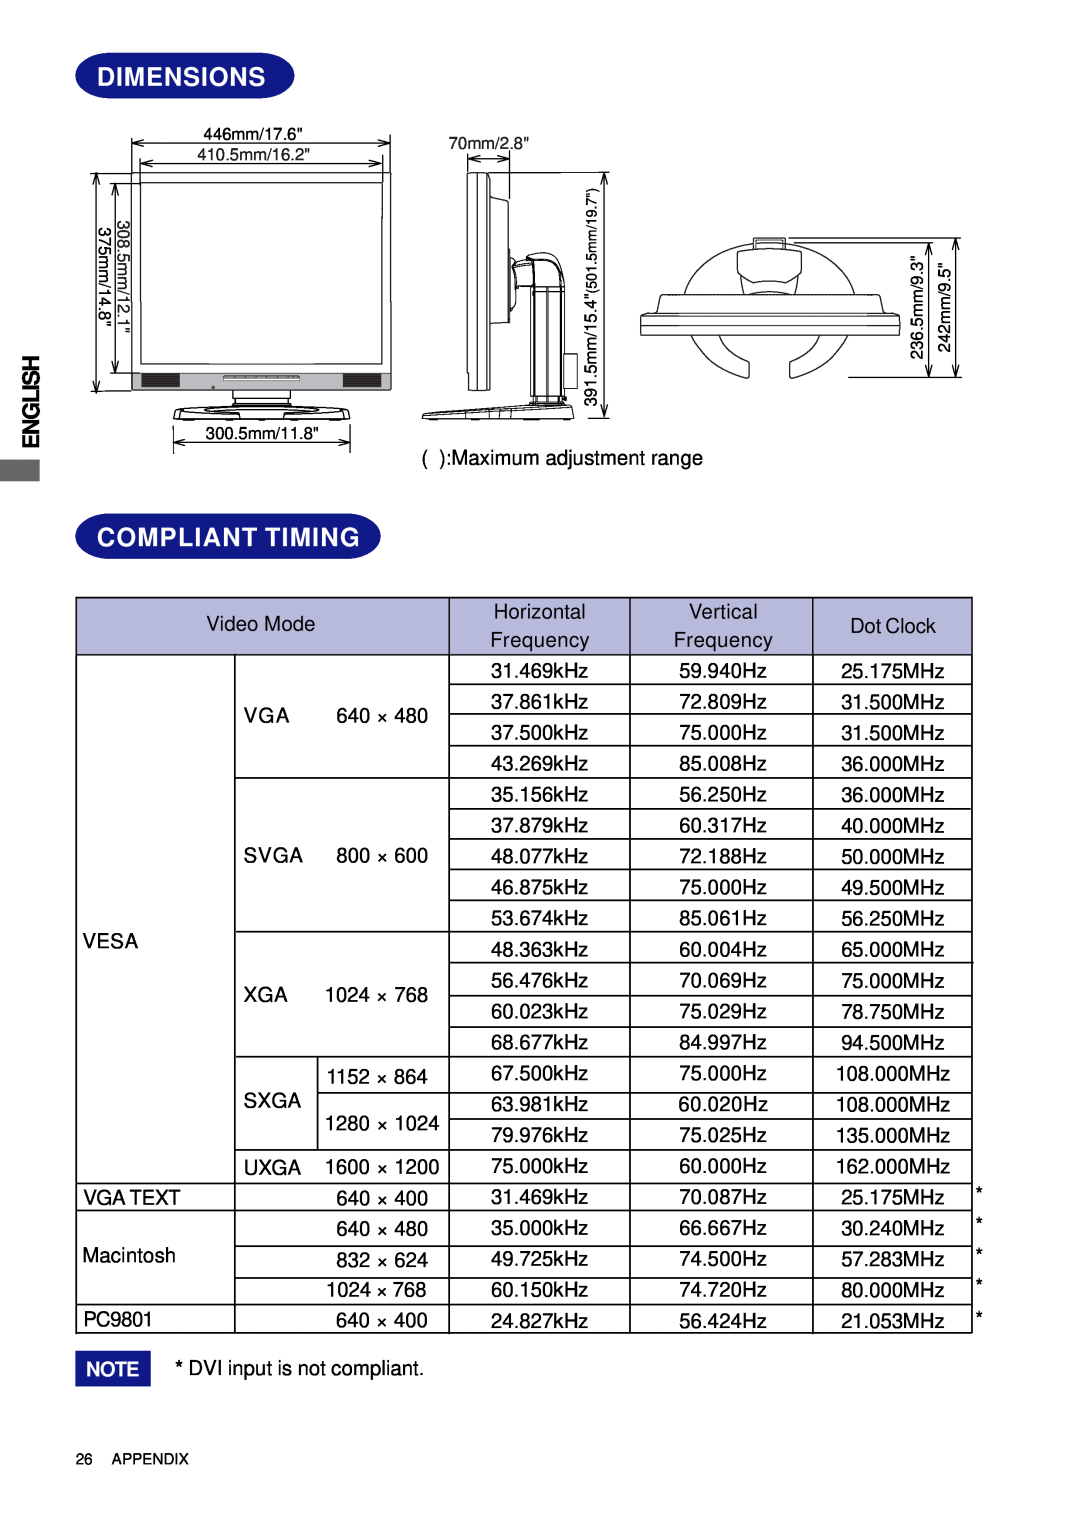 Iiyama H511S user manual Dimensions, Compliant Timing, English, 446mm/17.6, 300.5mm/11.8, 236.5mm/9.3, 242mm/9.5 